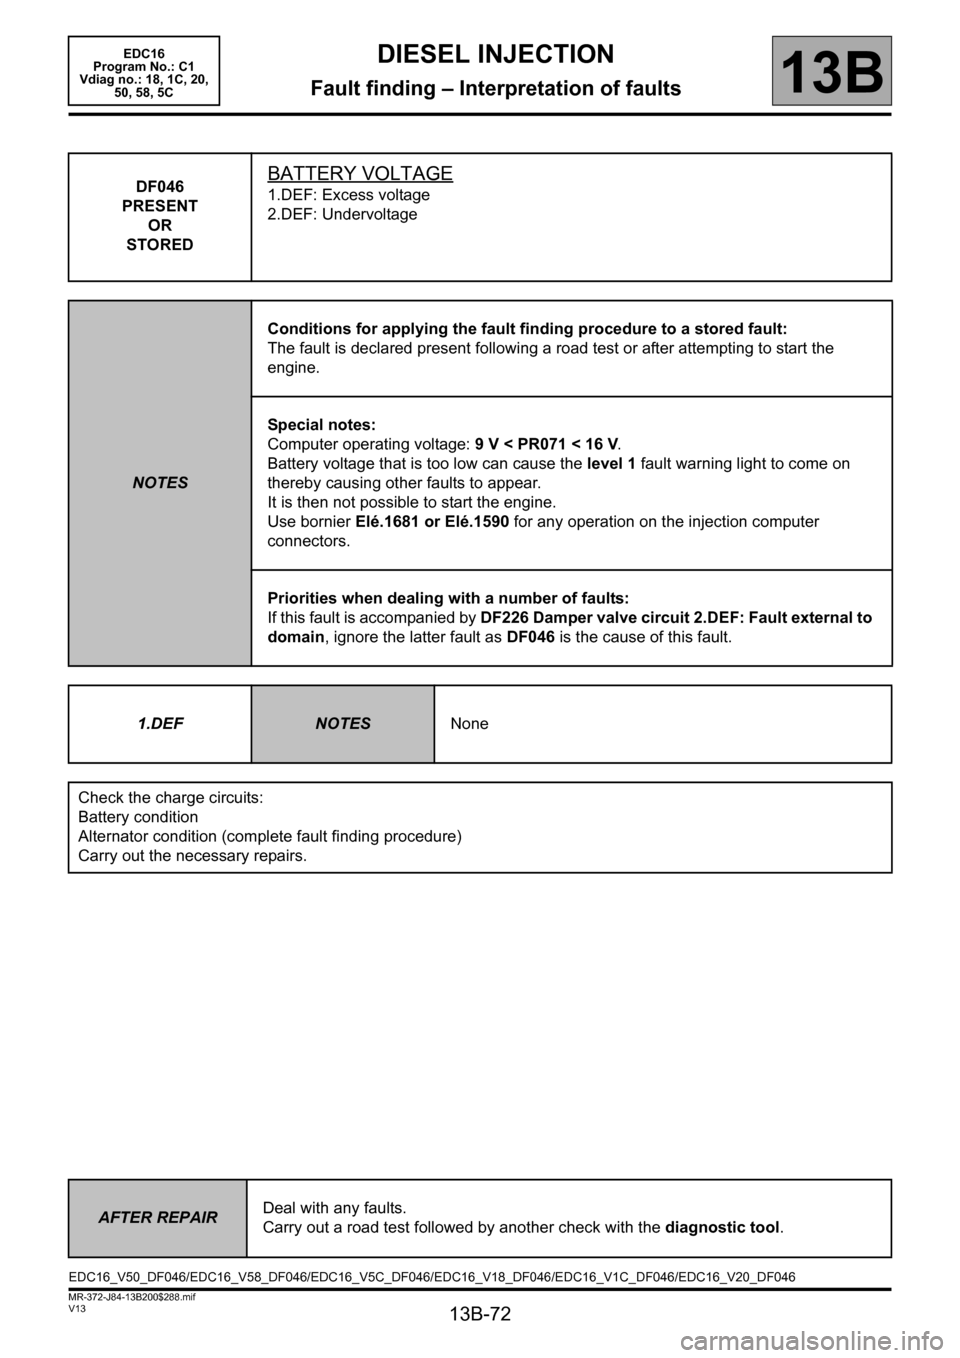 RENAULT SCENIC 2011 J95 / 3.G Engine And Peripherals EDC16 Manual PDF 13B-72
MR-372-J84-13B200$288.mif
V13
DIESEL INJECTION
Fault finding – Interpretation of faults
EDC16  
Program No.: C1 
Vdiag no.: 18, 1C, 20,  
50, 58, 5C
13B
DF046
PRESENT
OR
STOREDBATTERY VOLTAGE